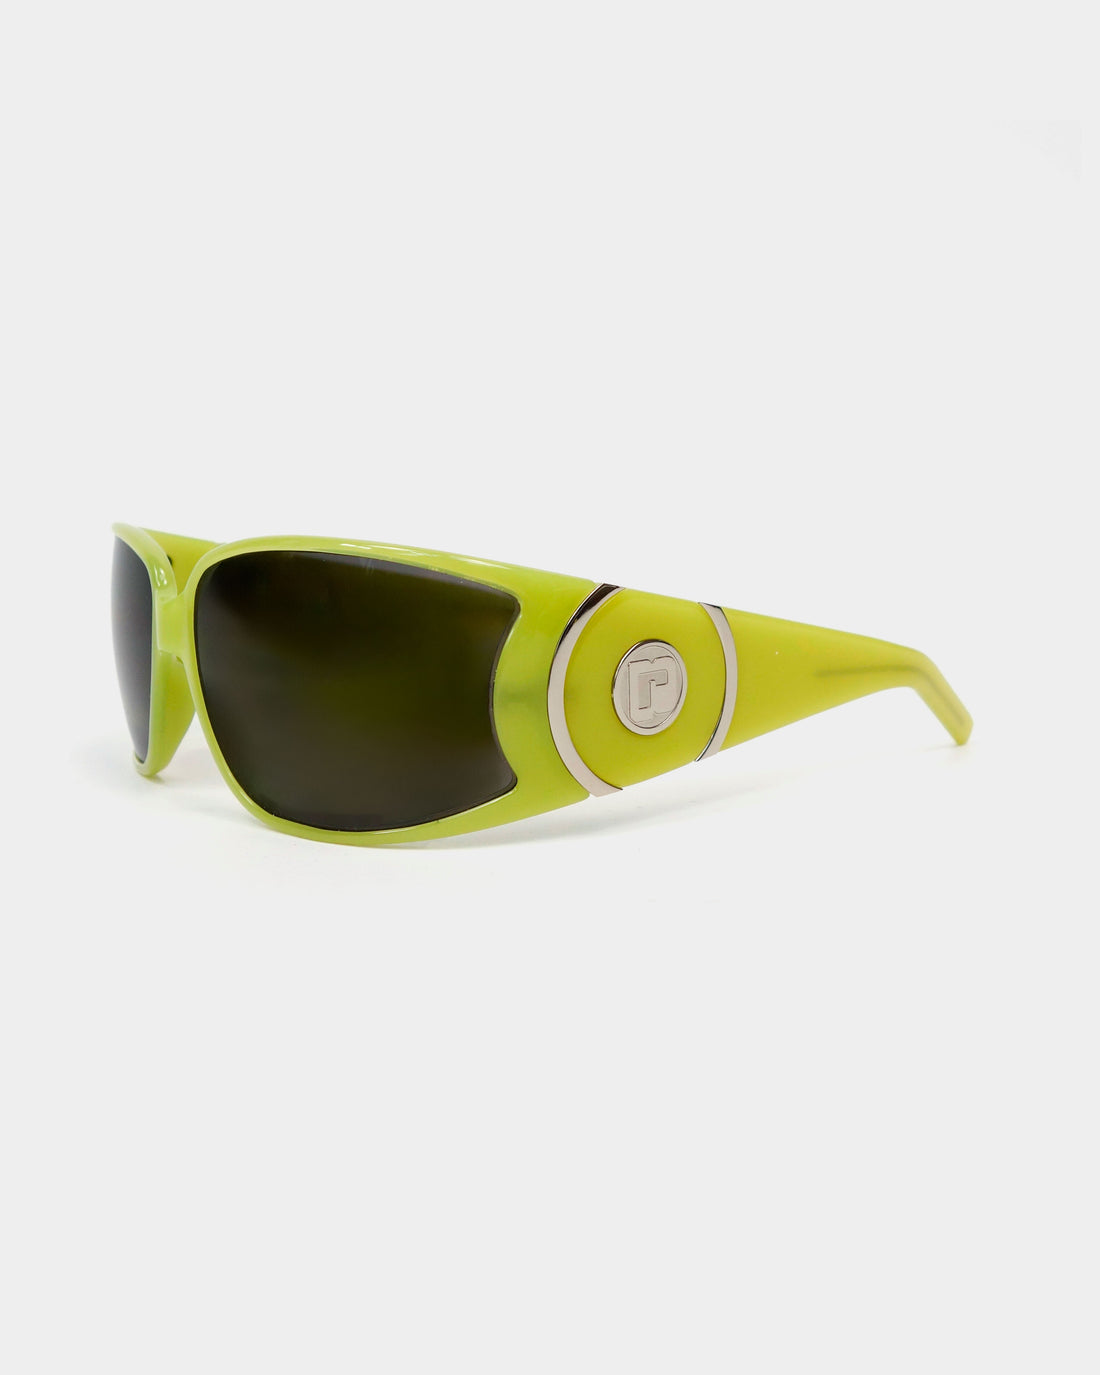 Paco Rabanne PR-Neon Sunglasses 1990's